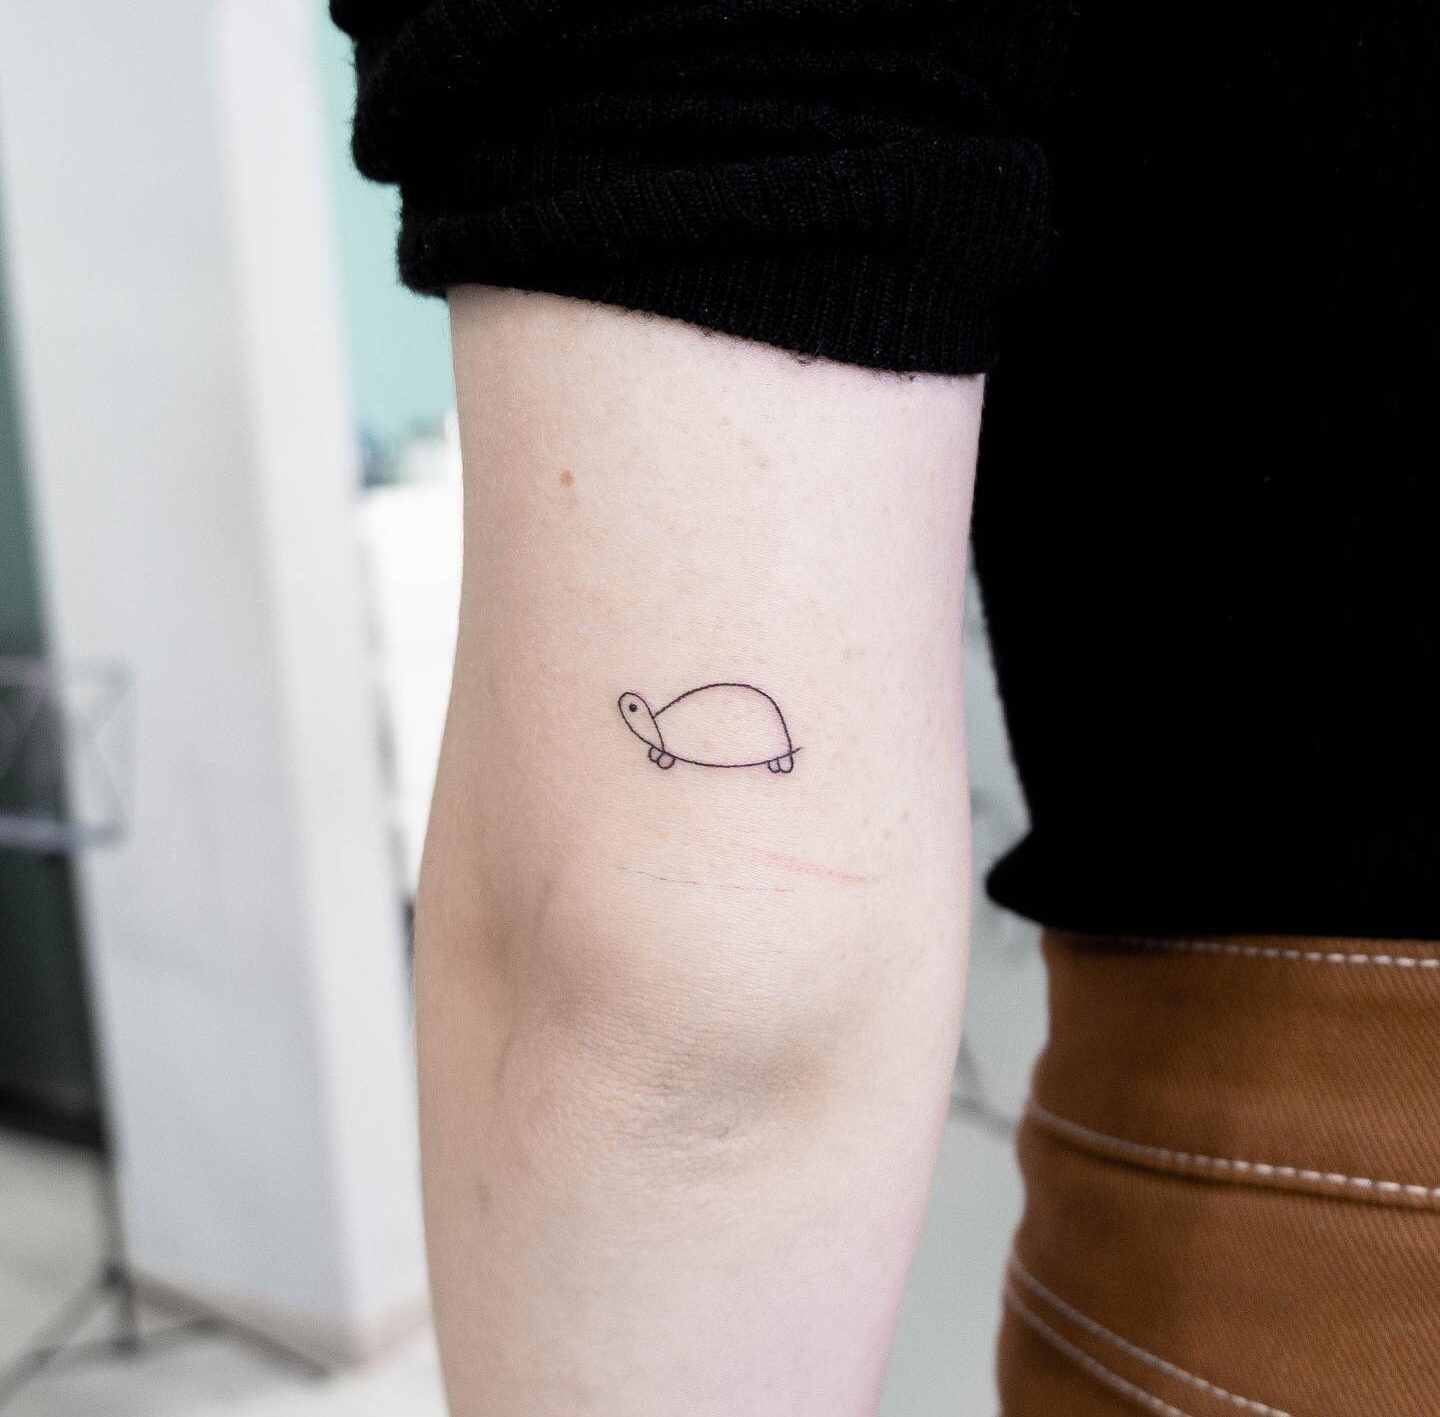 Minimalistic turtle tattoo on outer arm